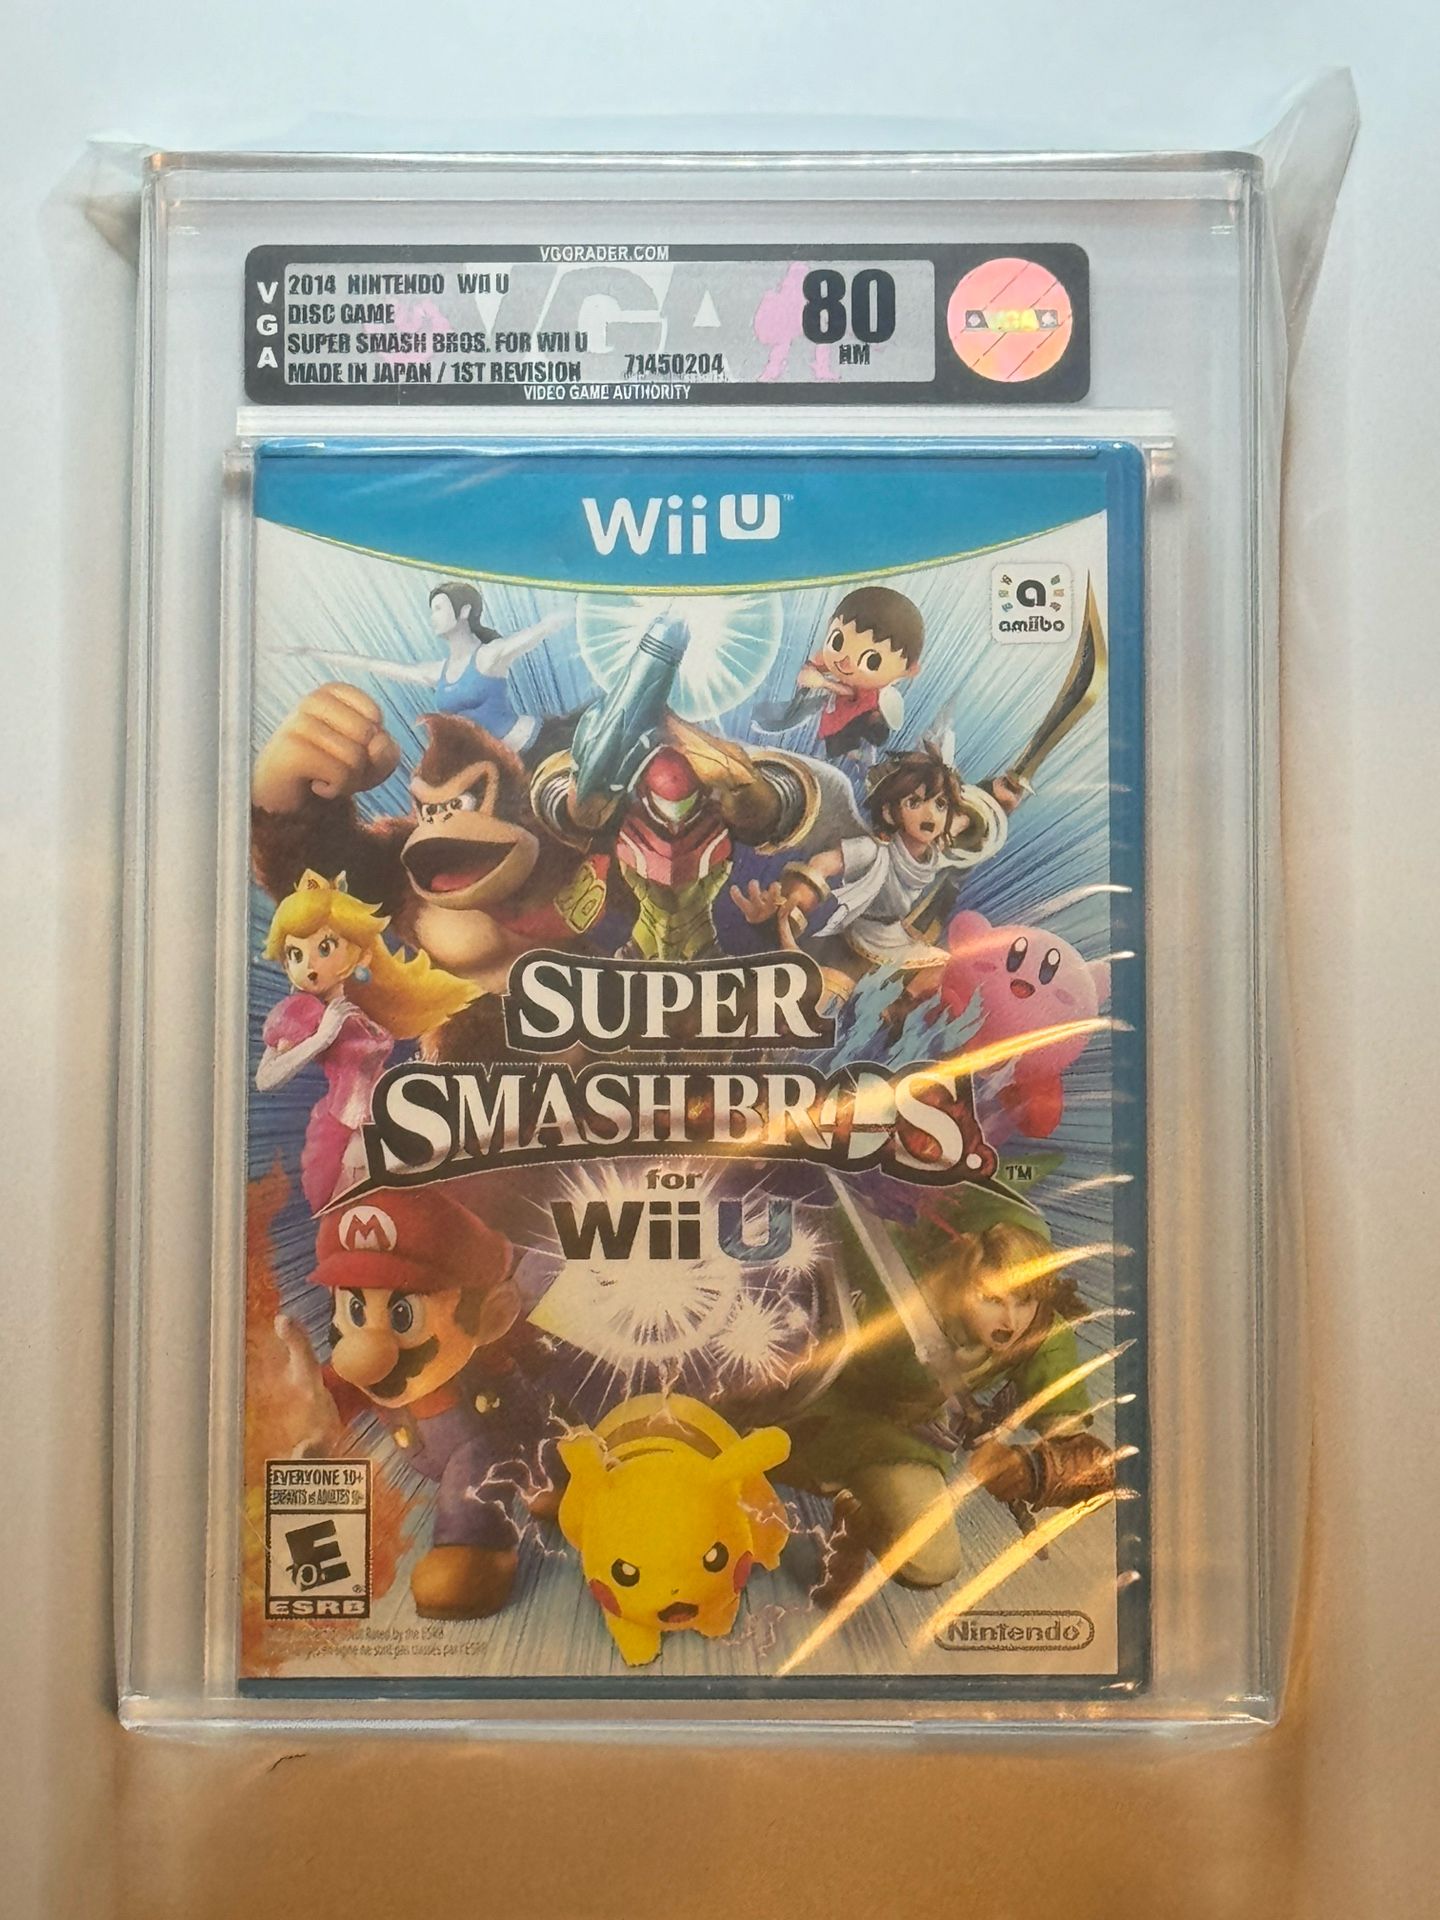 Super smash bros Nintendo Wii U factory sealed VGA 80